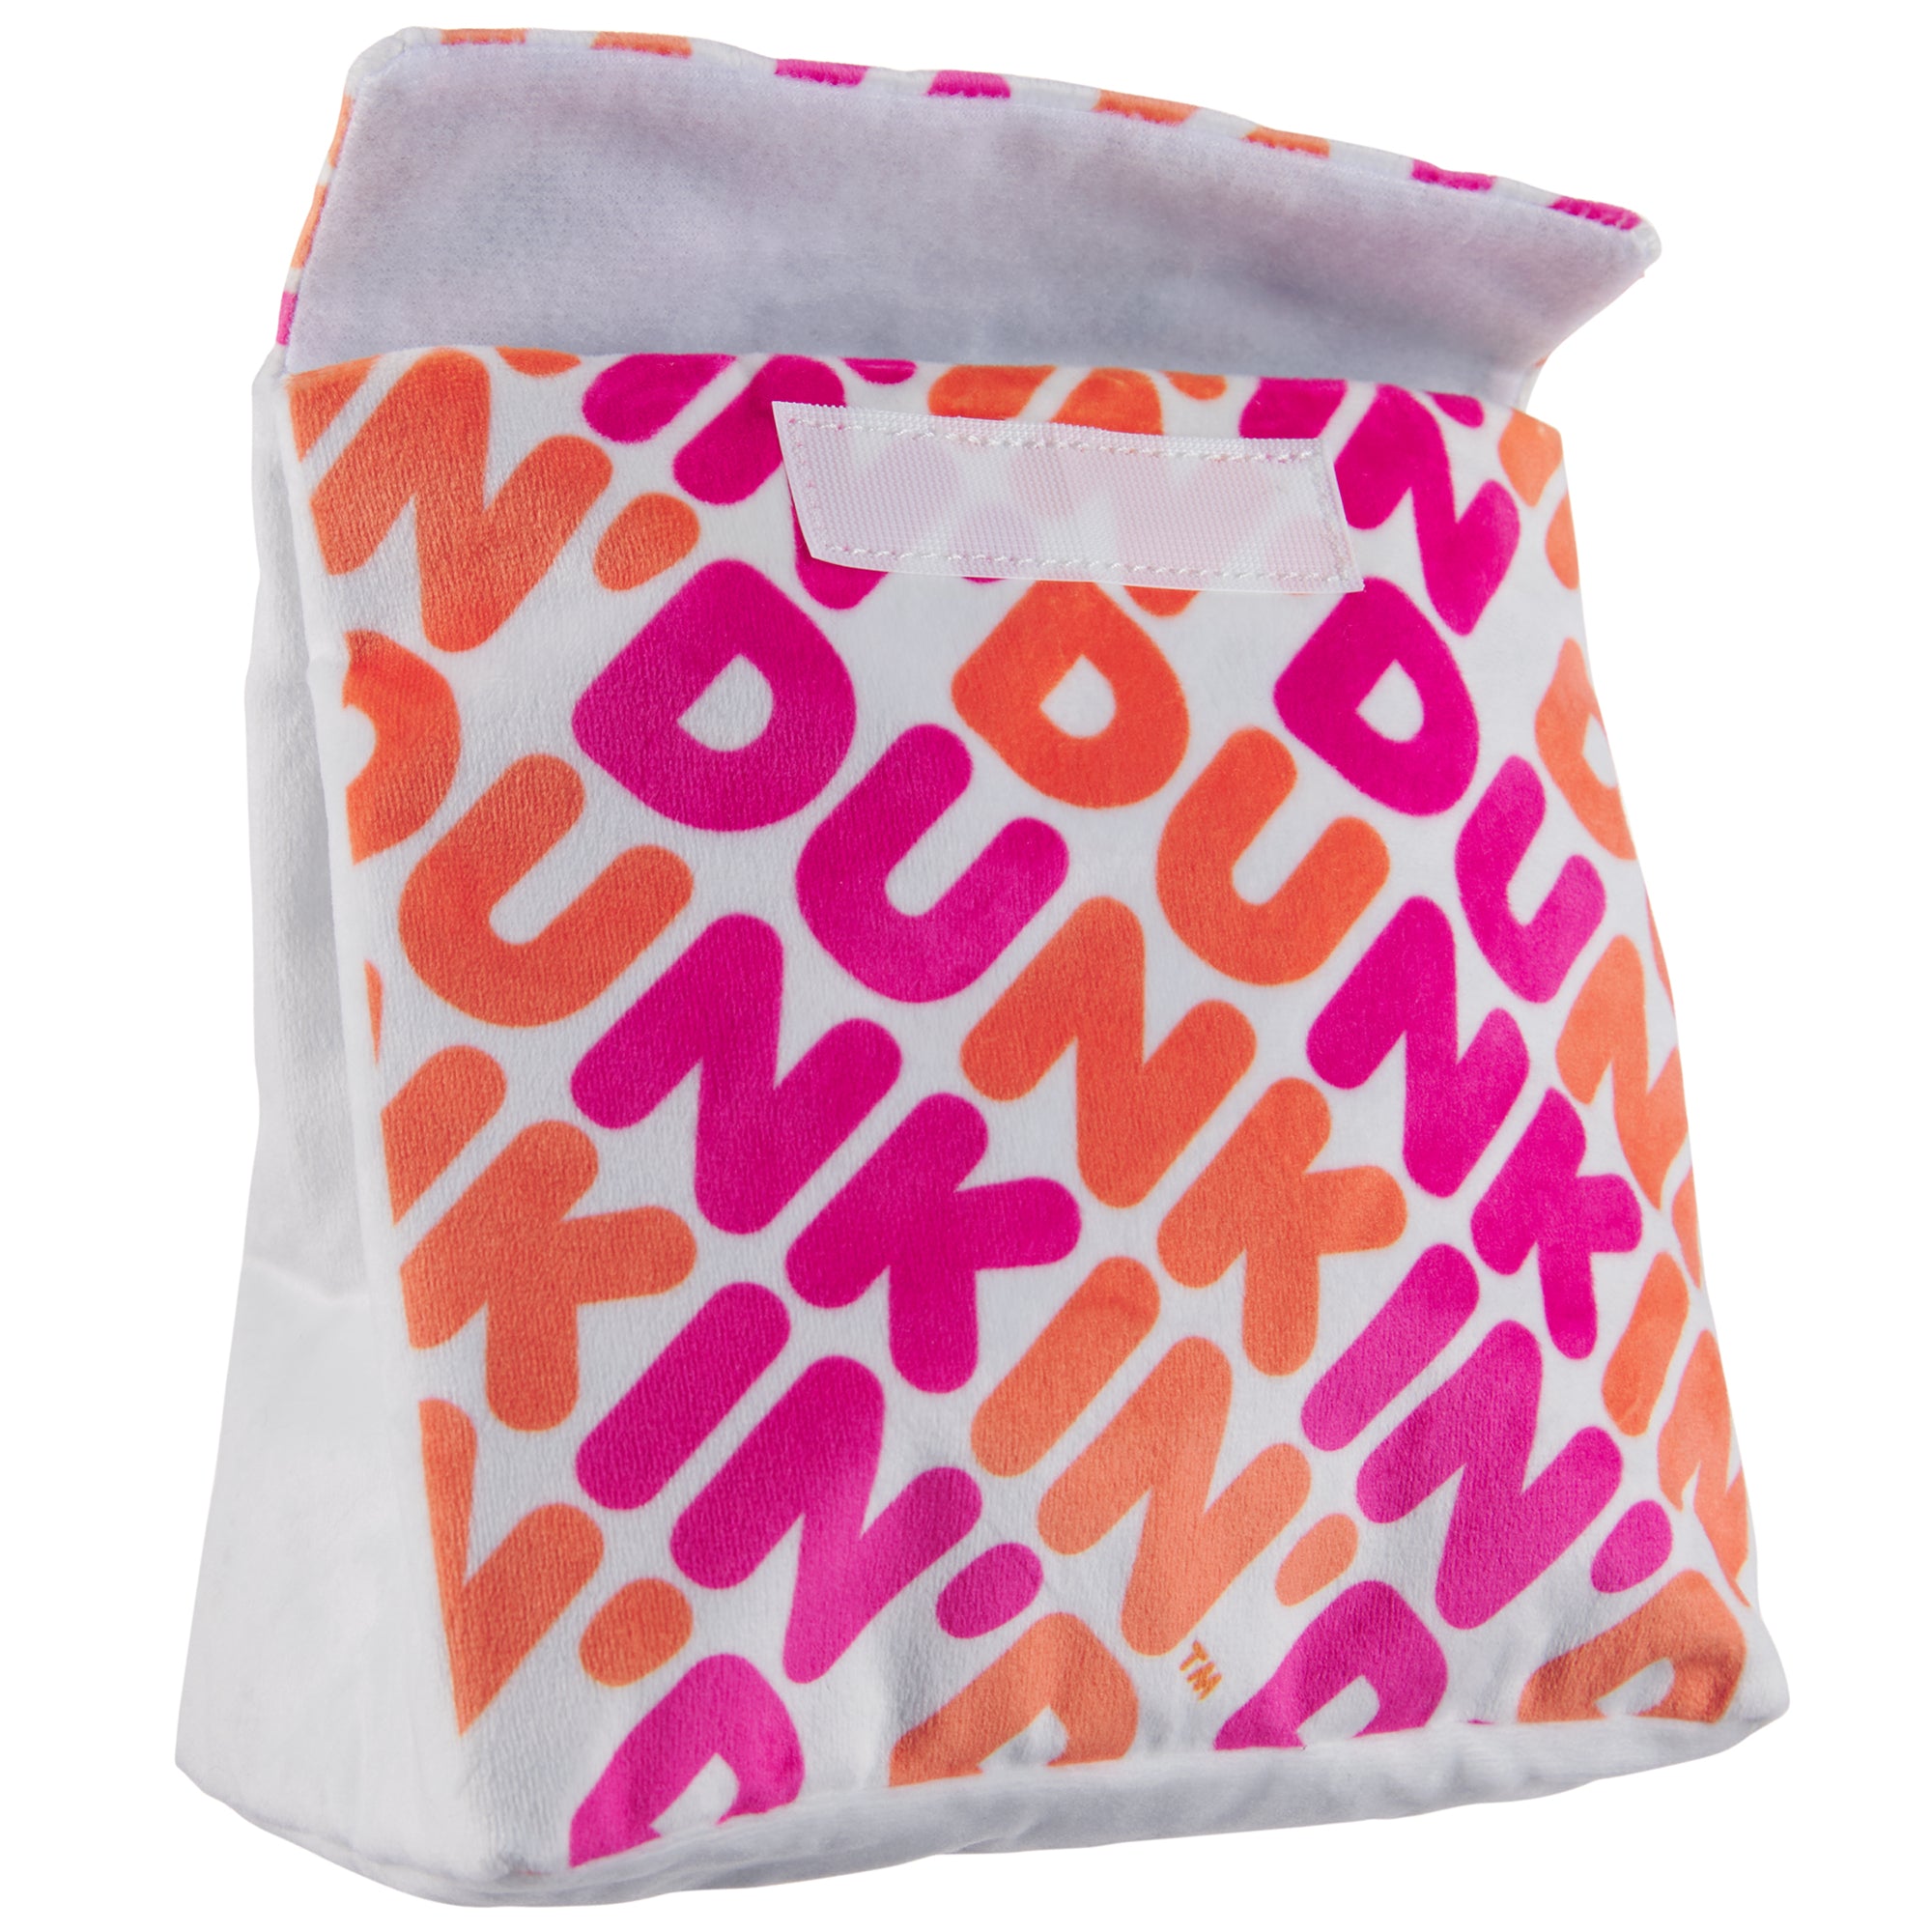 Dunkin'® Donut Bag Toy